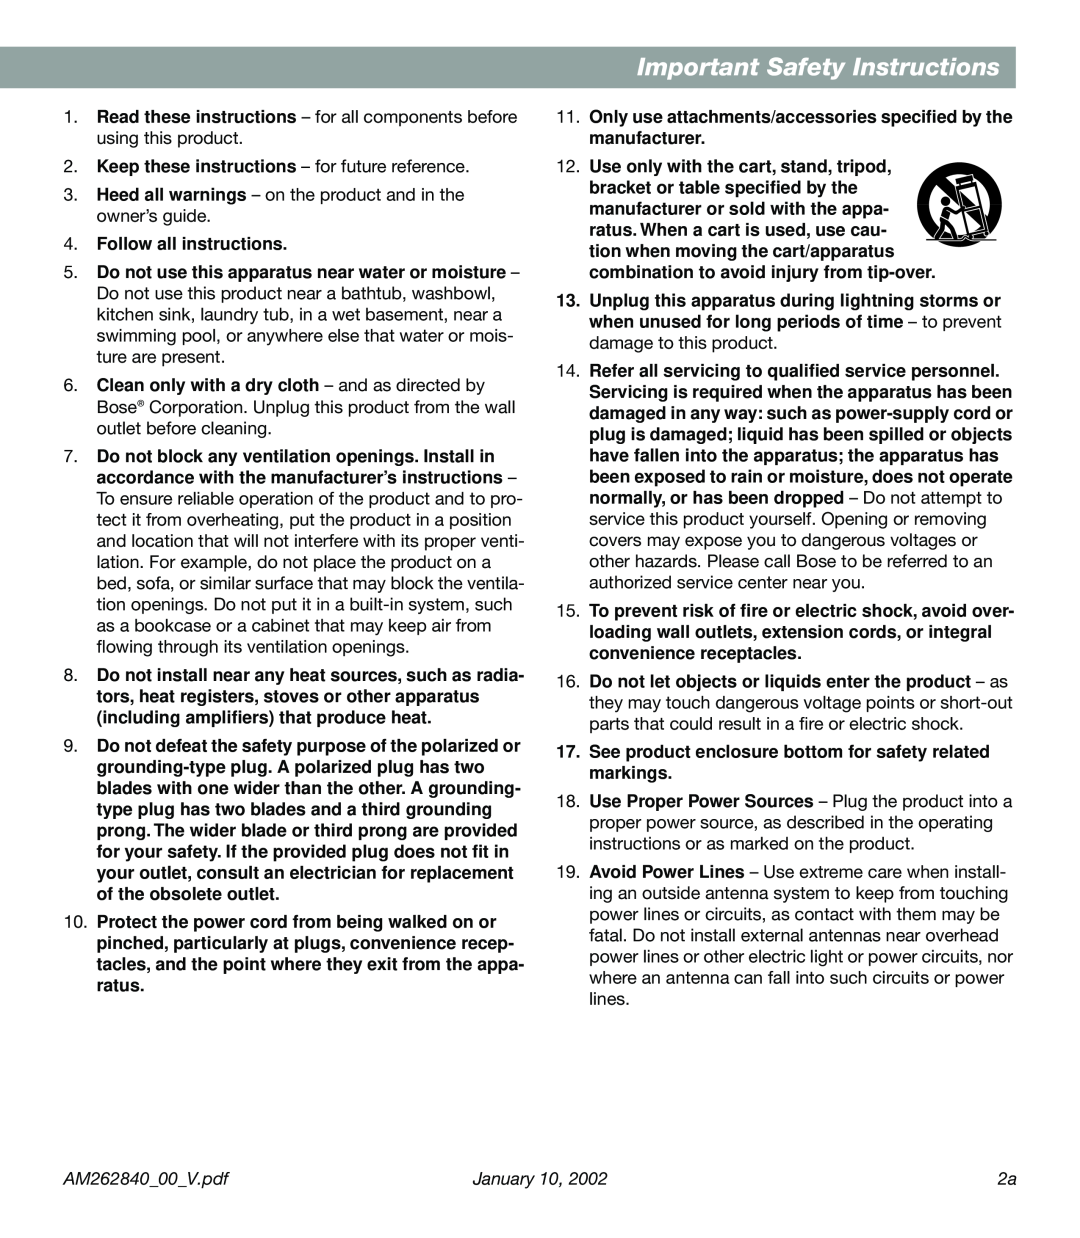 Bose AM262840 manual Important Safety Instructions, January 